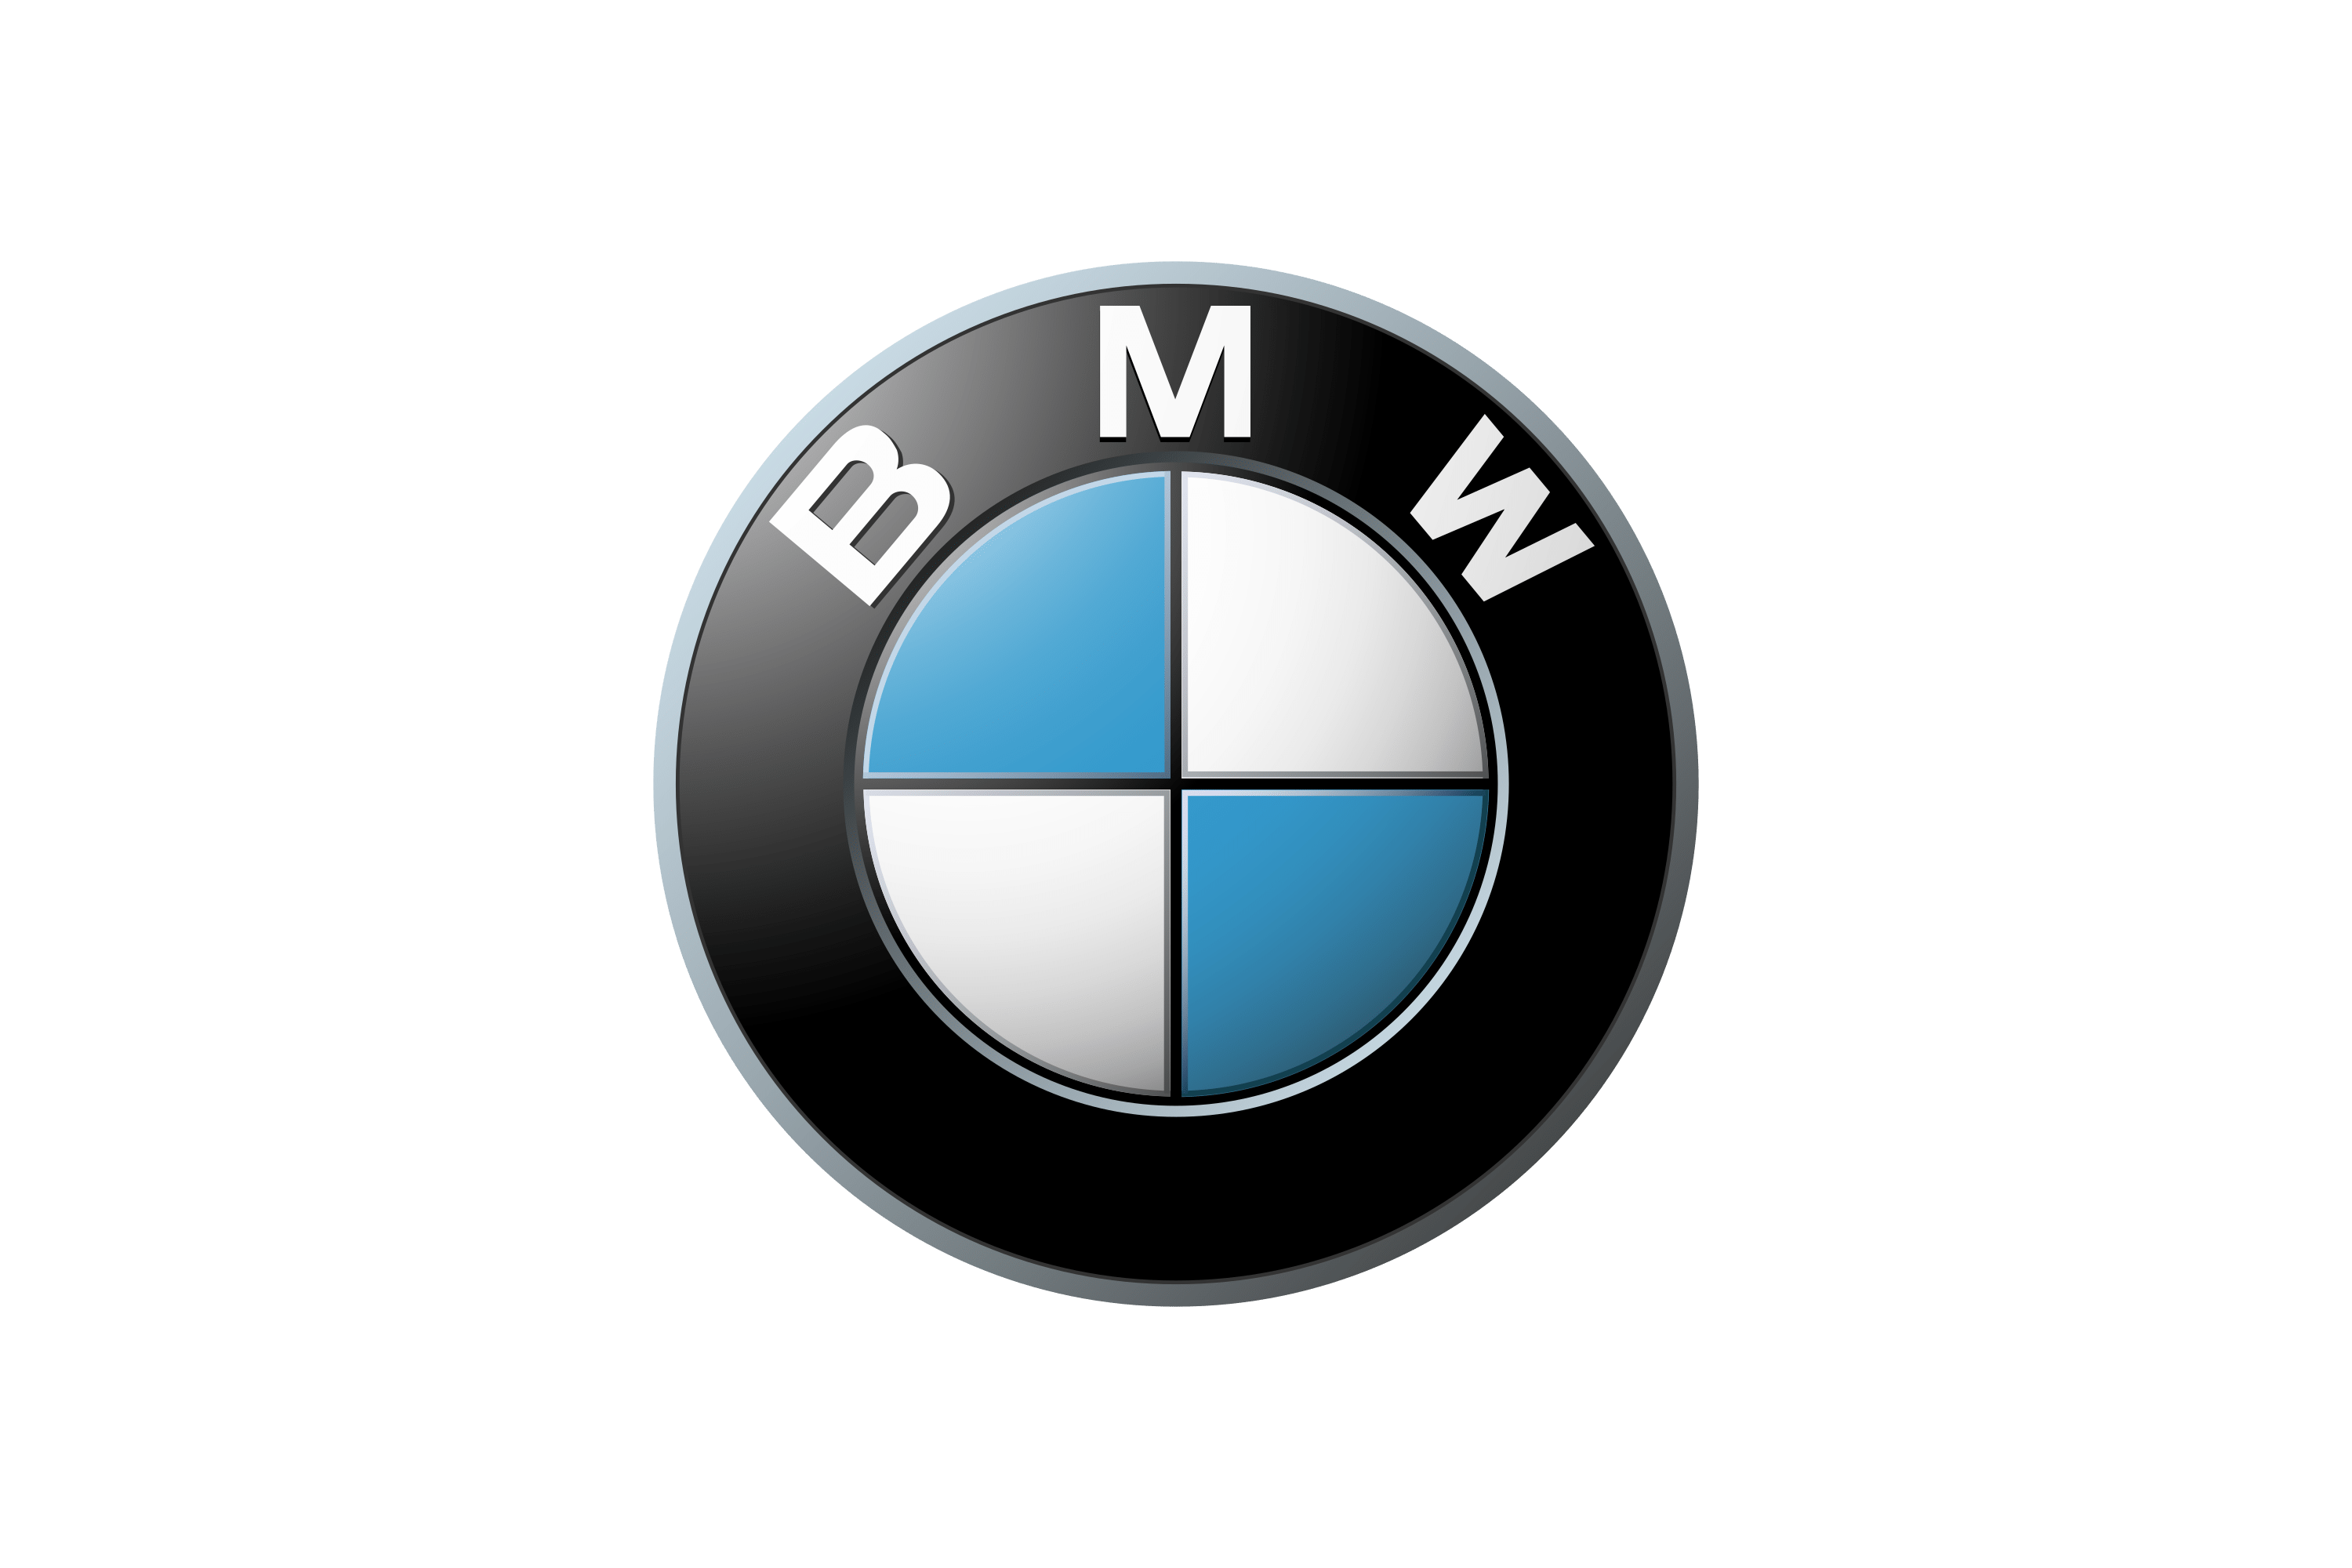 https://download.logo.wine/logo/BMW_Motorrad/BMW_Motorrad-Logo.wine.png